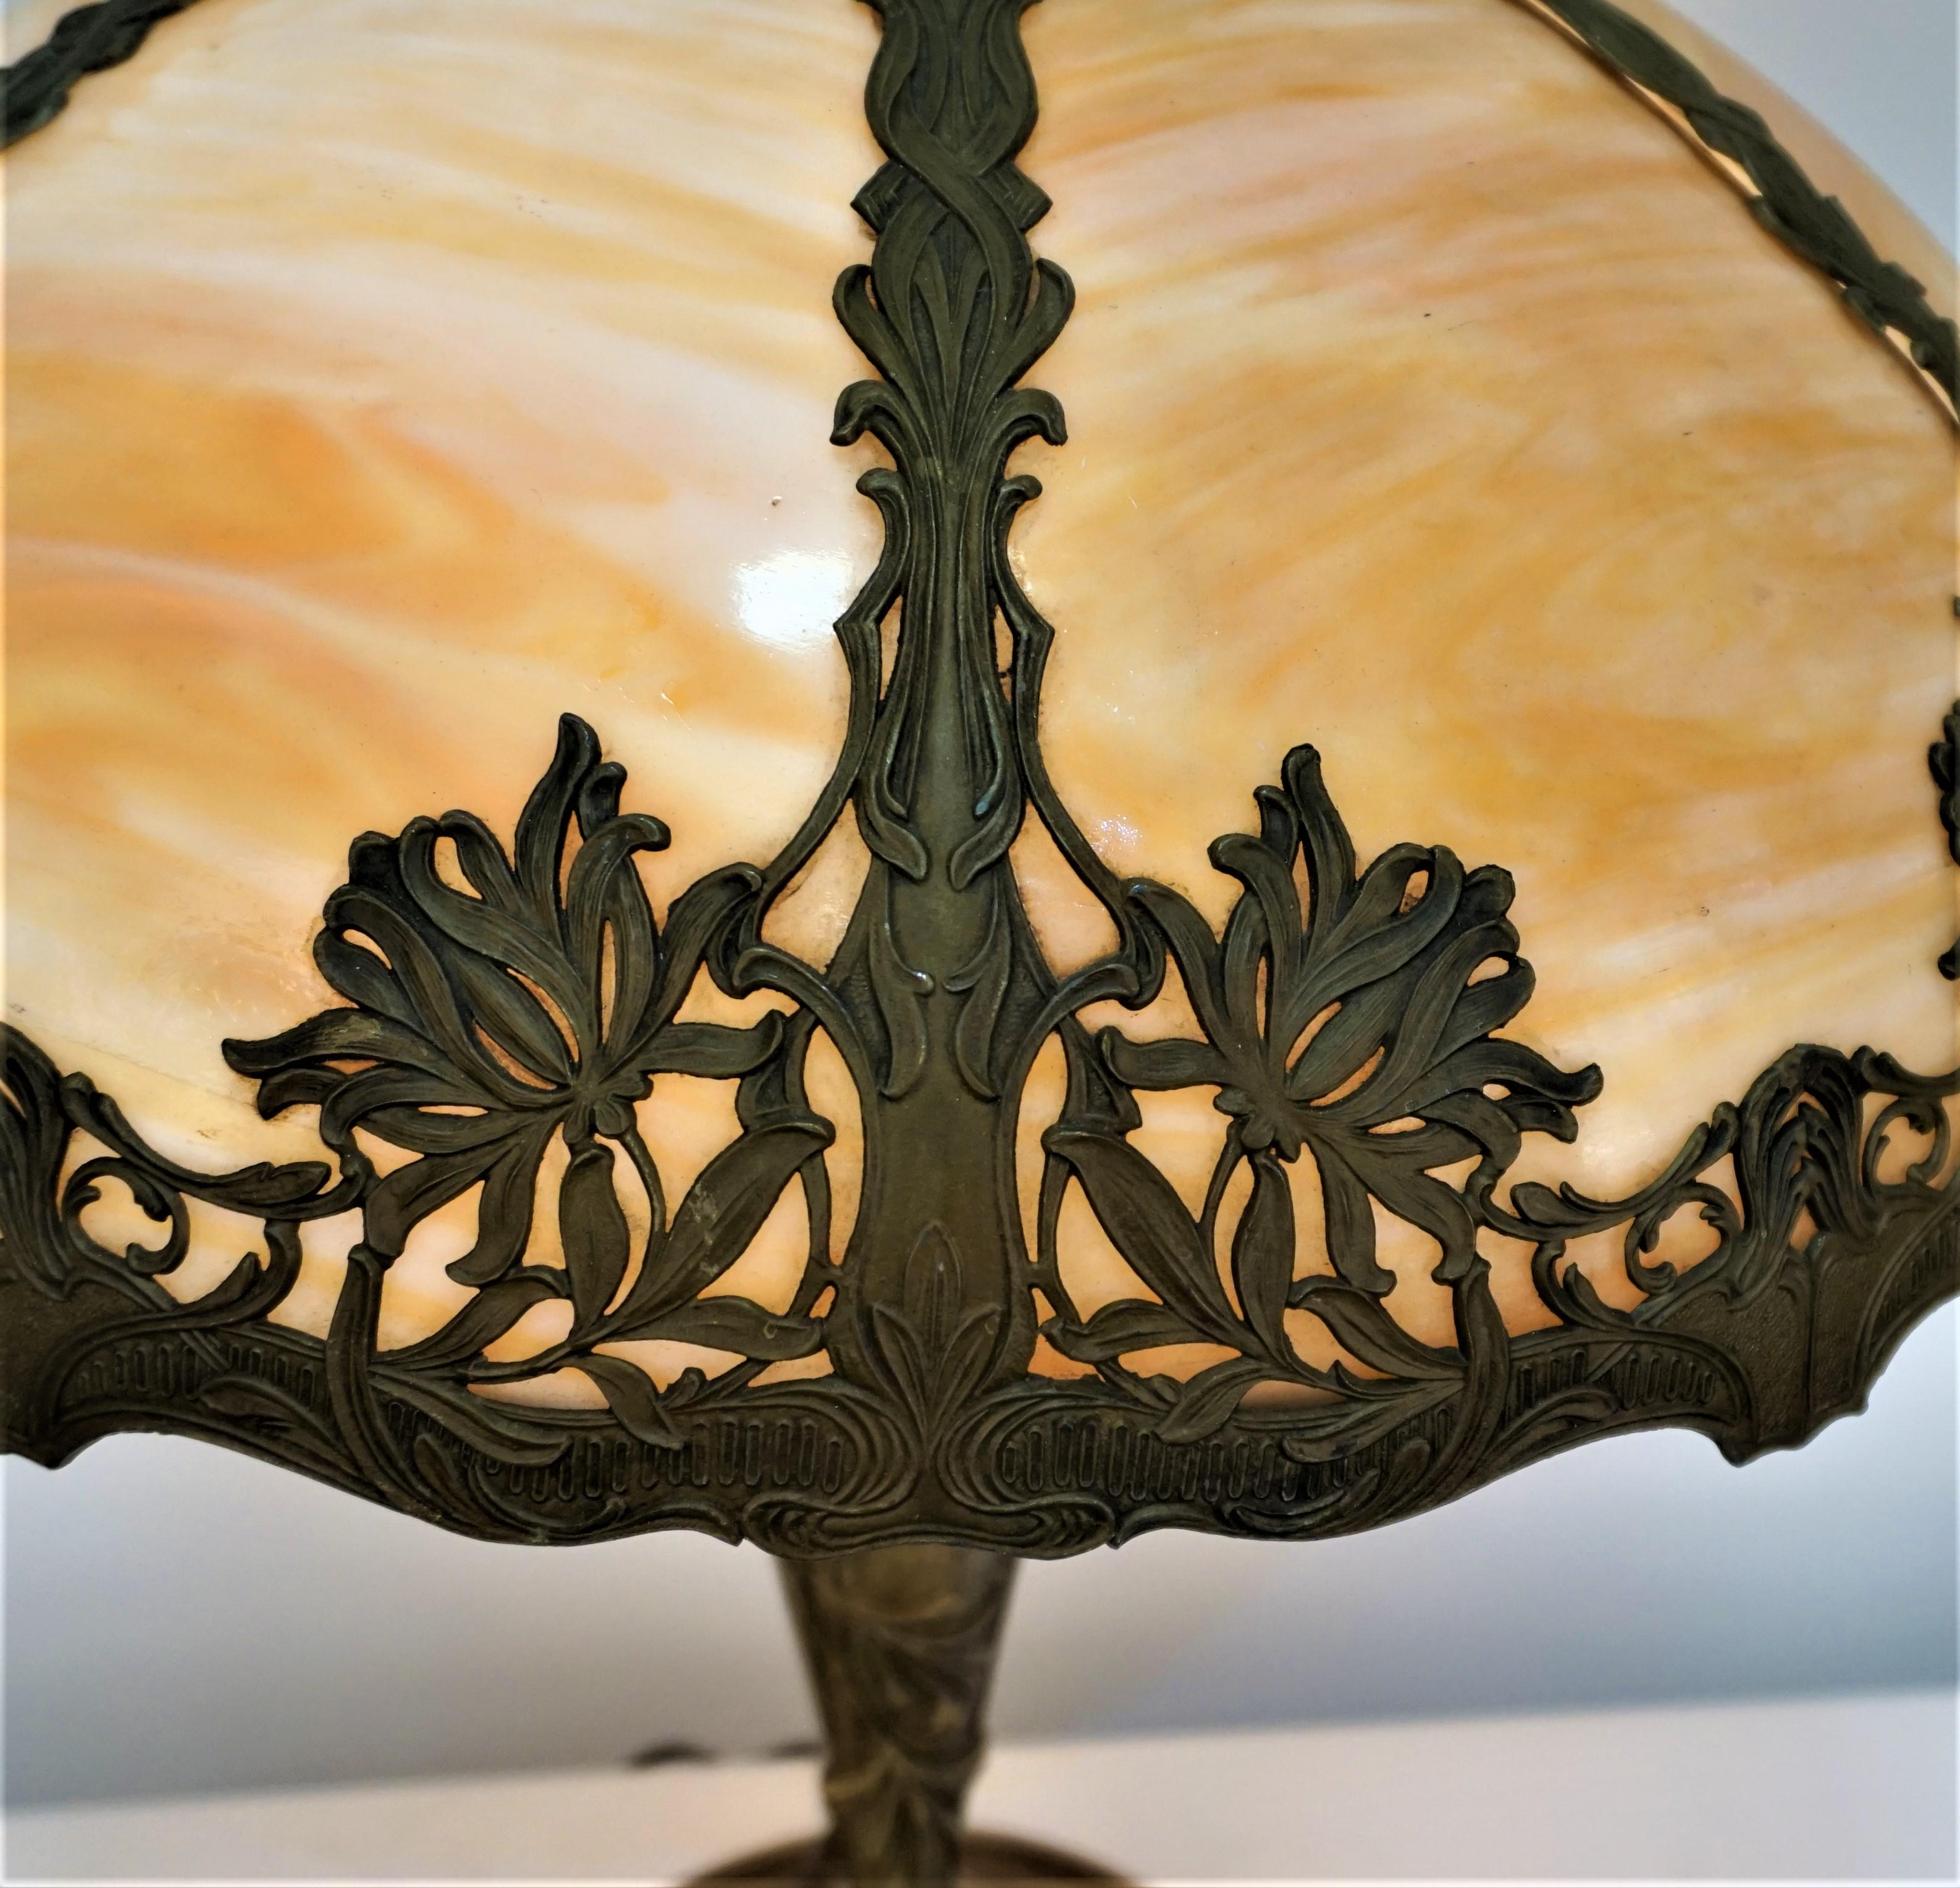 Beautiful early 20th century American art nouveau slag glass domed shape table lamp.